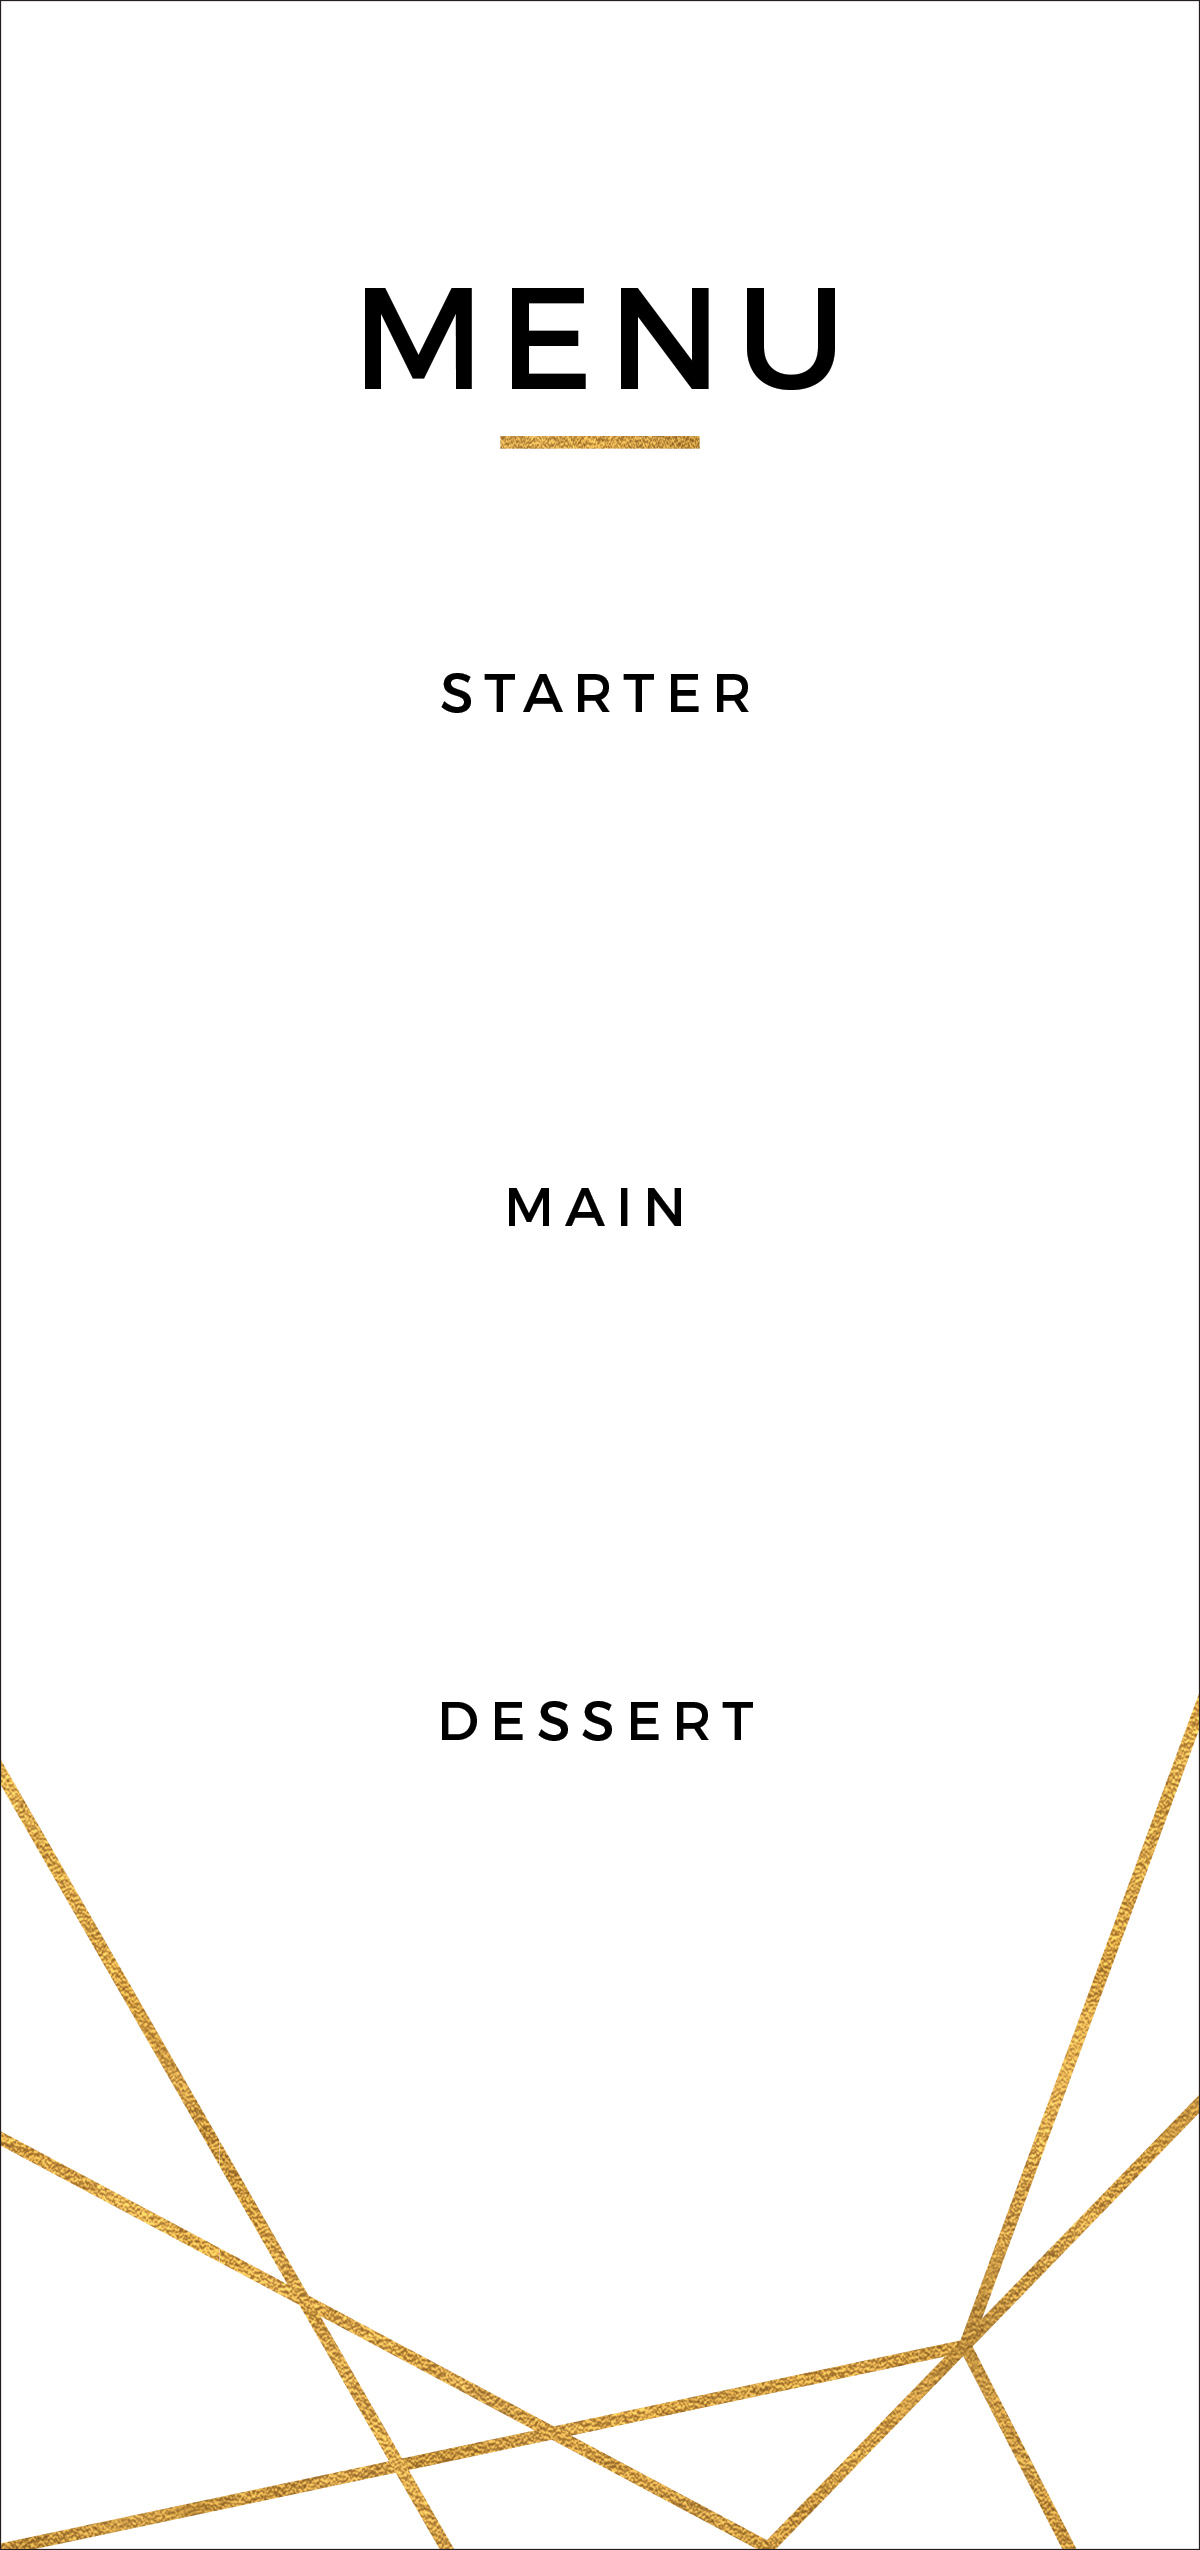 geometric dinner party menu template